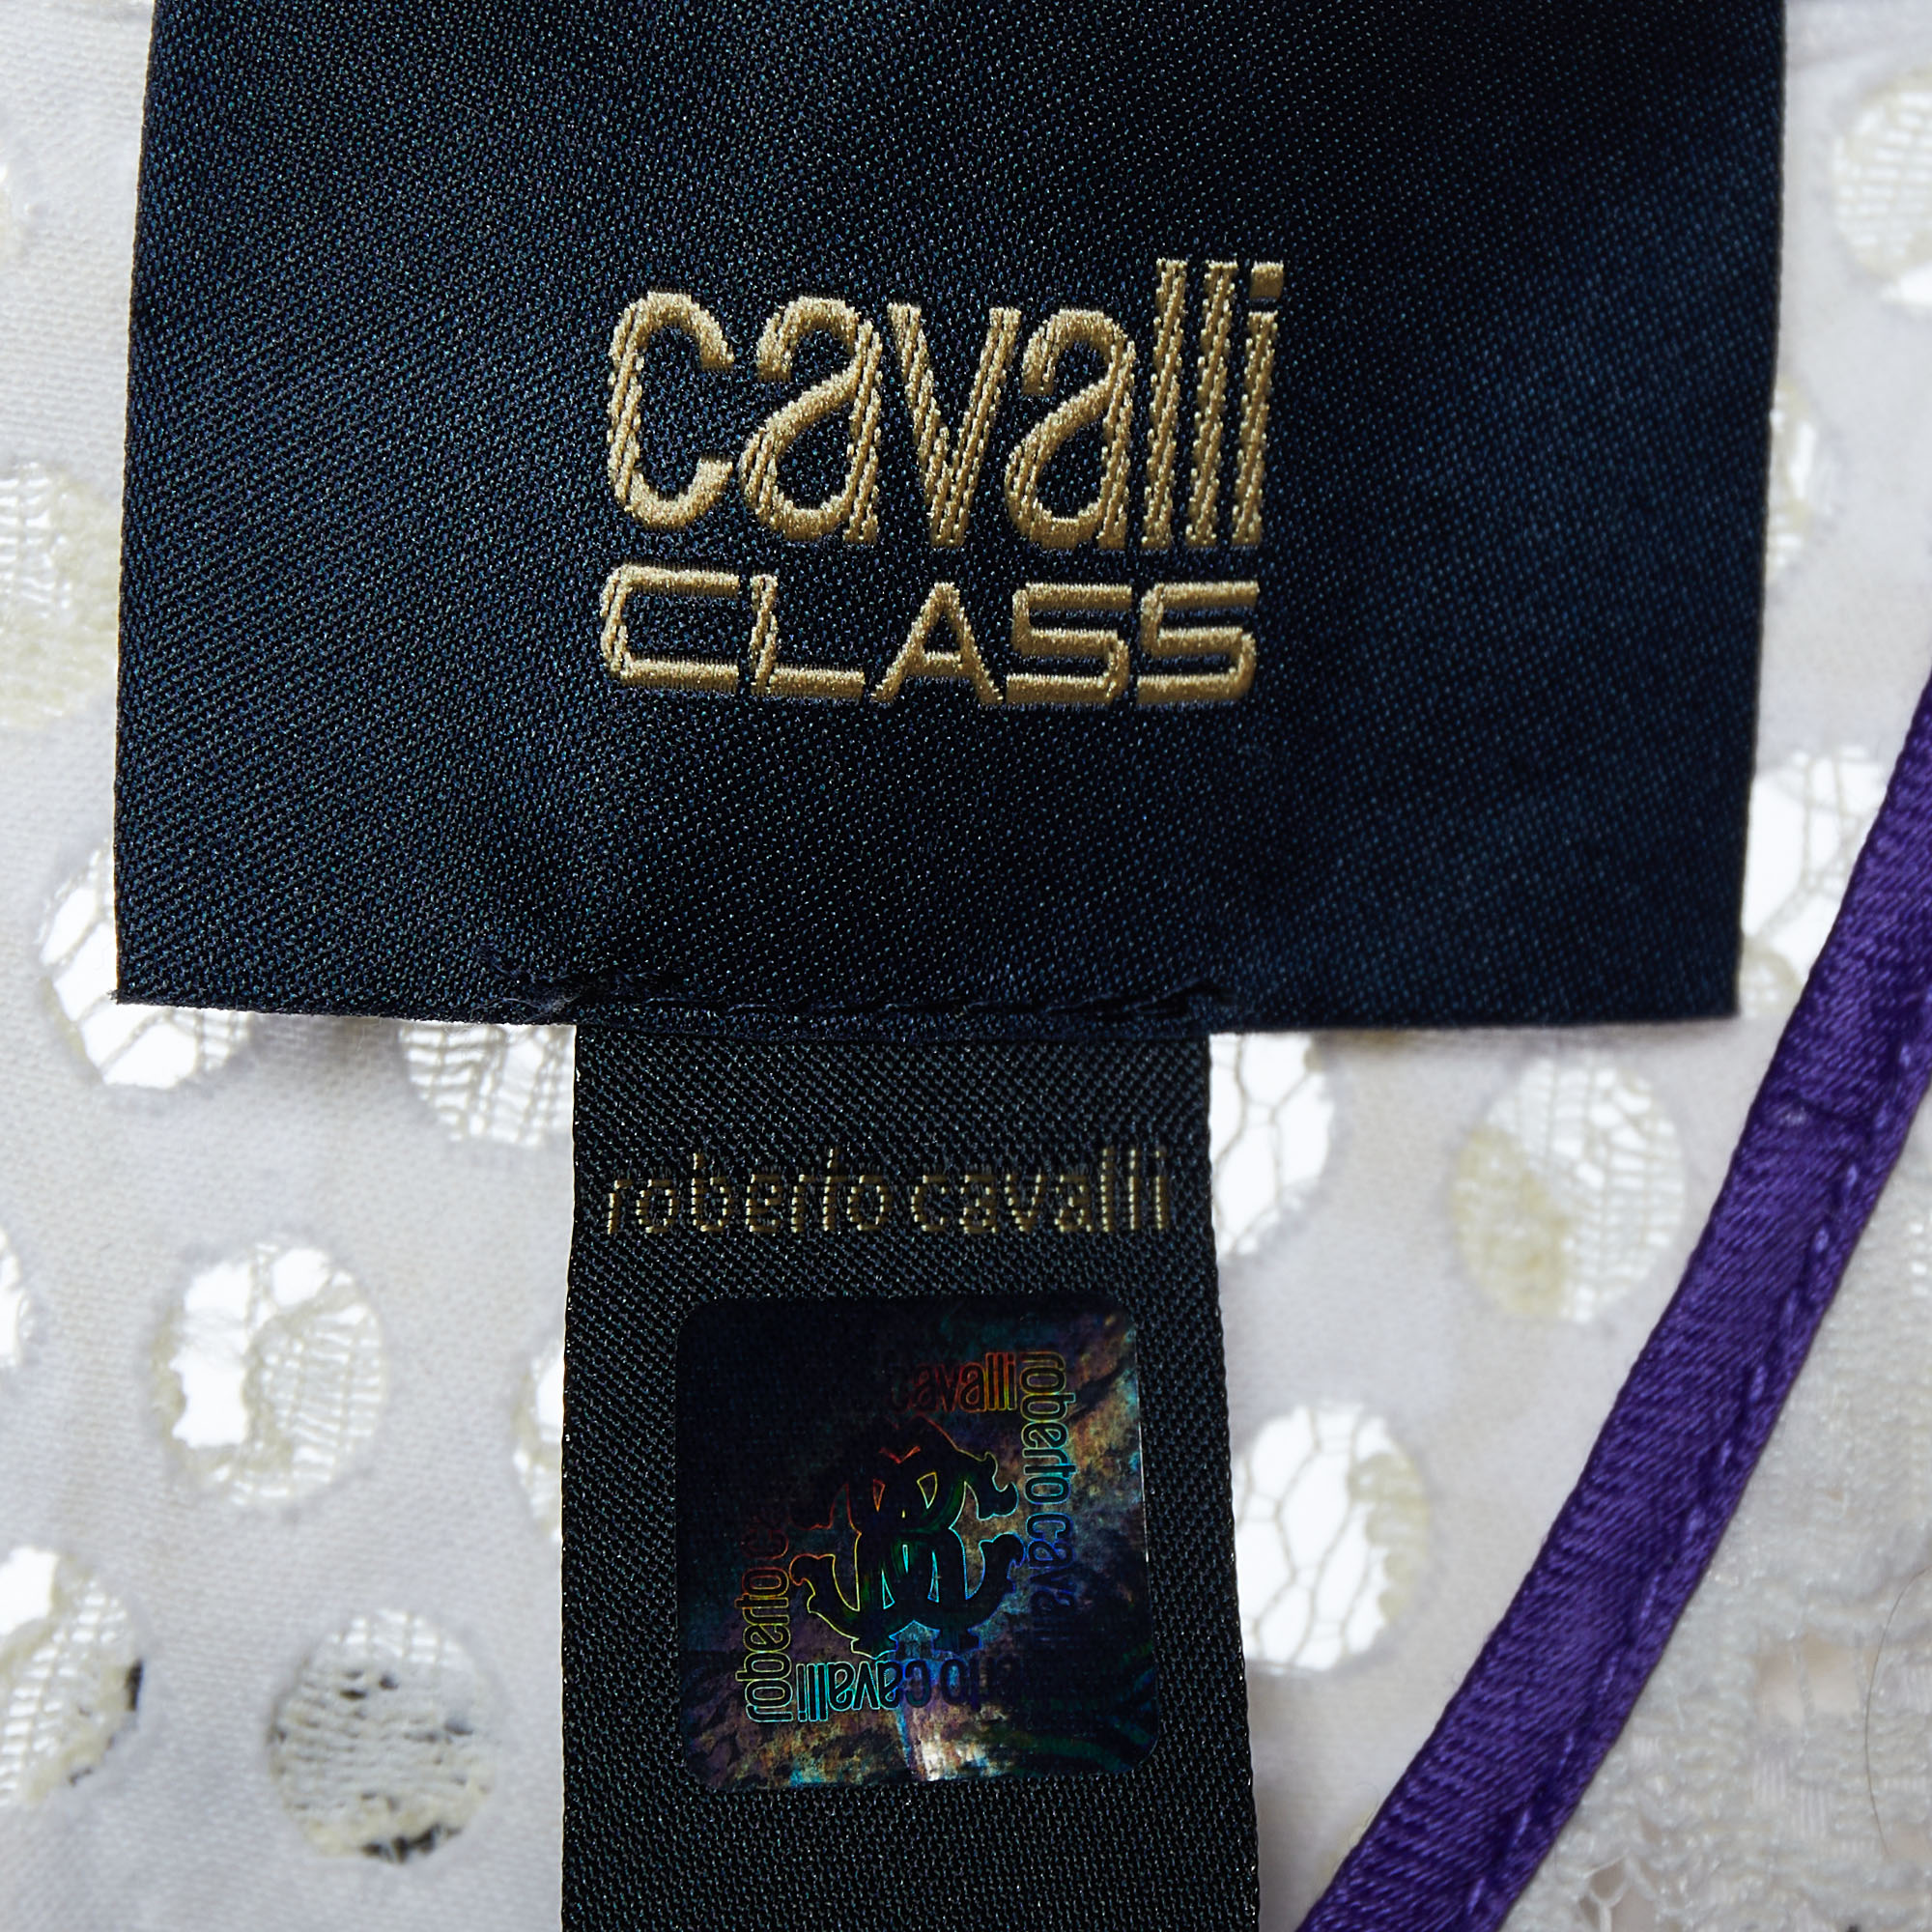 Cavalli Class Purple Seersucker Cotton & Lace Sleeveless Dress M